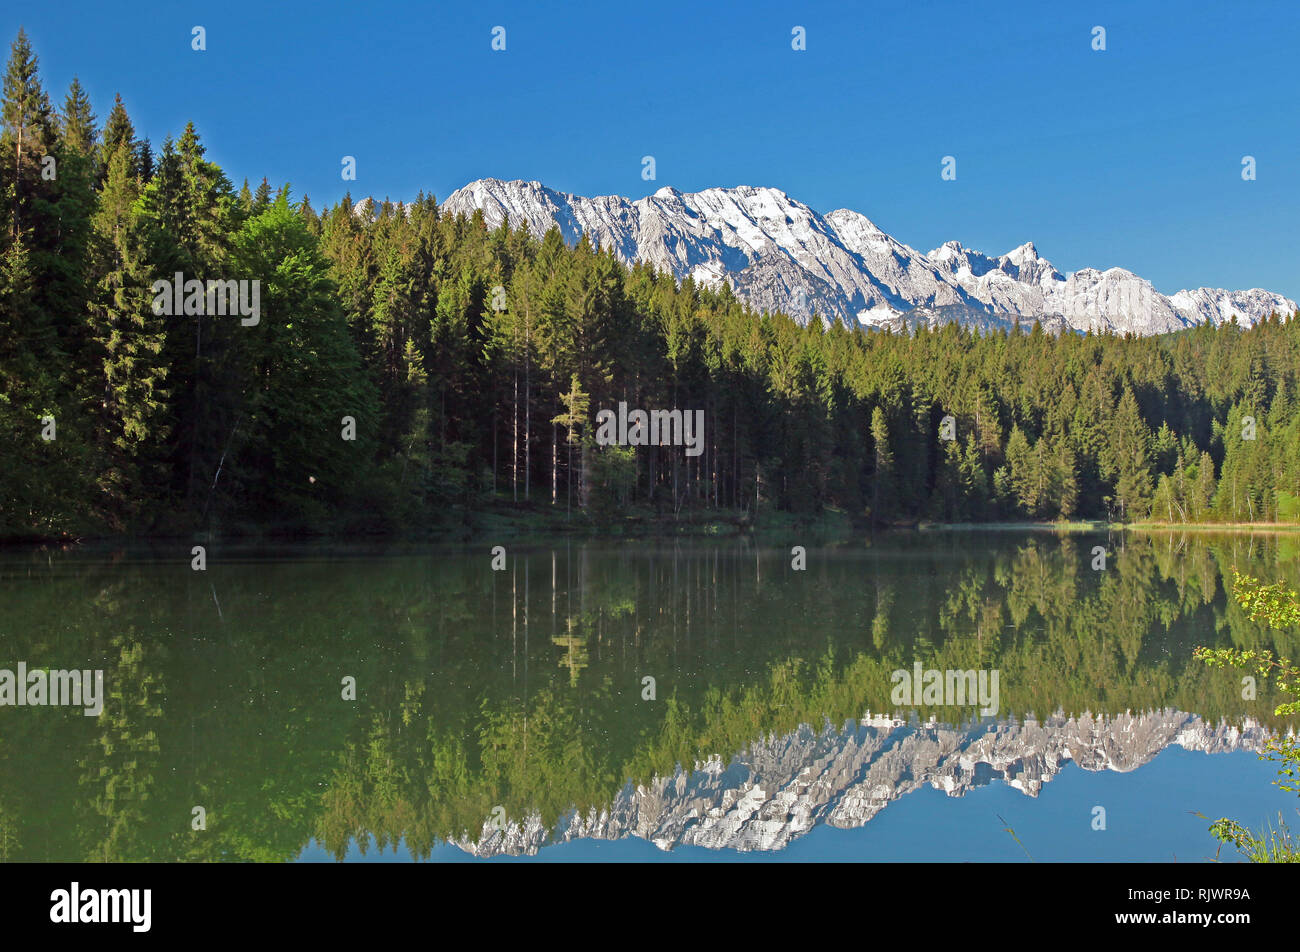 Grub Lake, Werdenfelser Country, Bavaria, Germany, Alpine Lake, Small Mountain Lake, Bathing Lake, Forest, Esther Mountains, Rugged Mountainsides Stock Photo